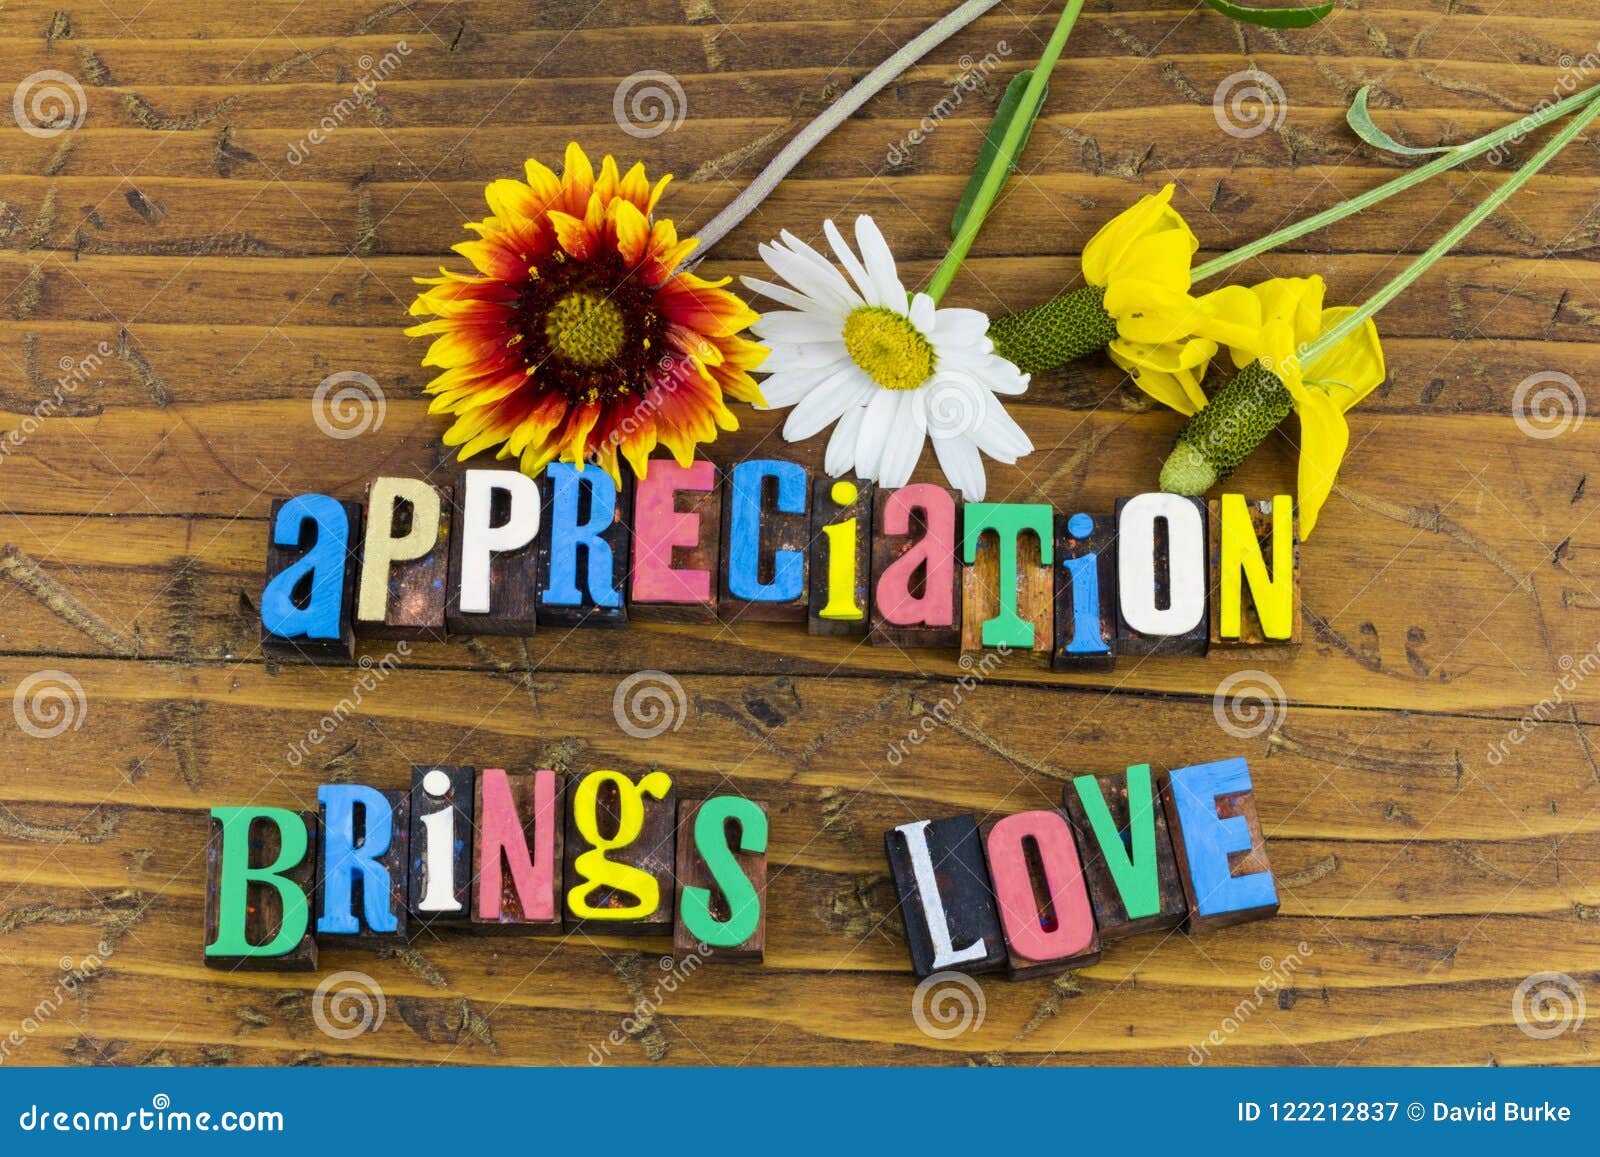 appreciation nature gratitude caring romance love flowers relationship